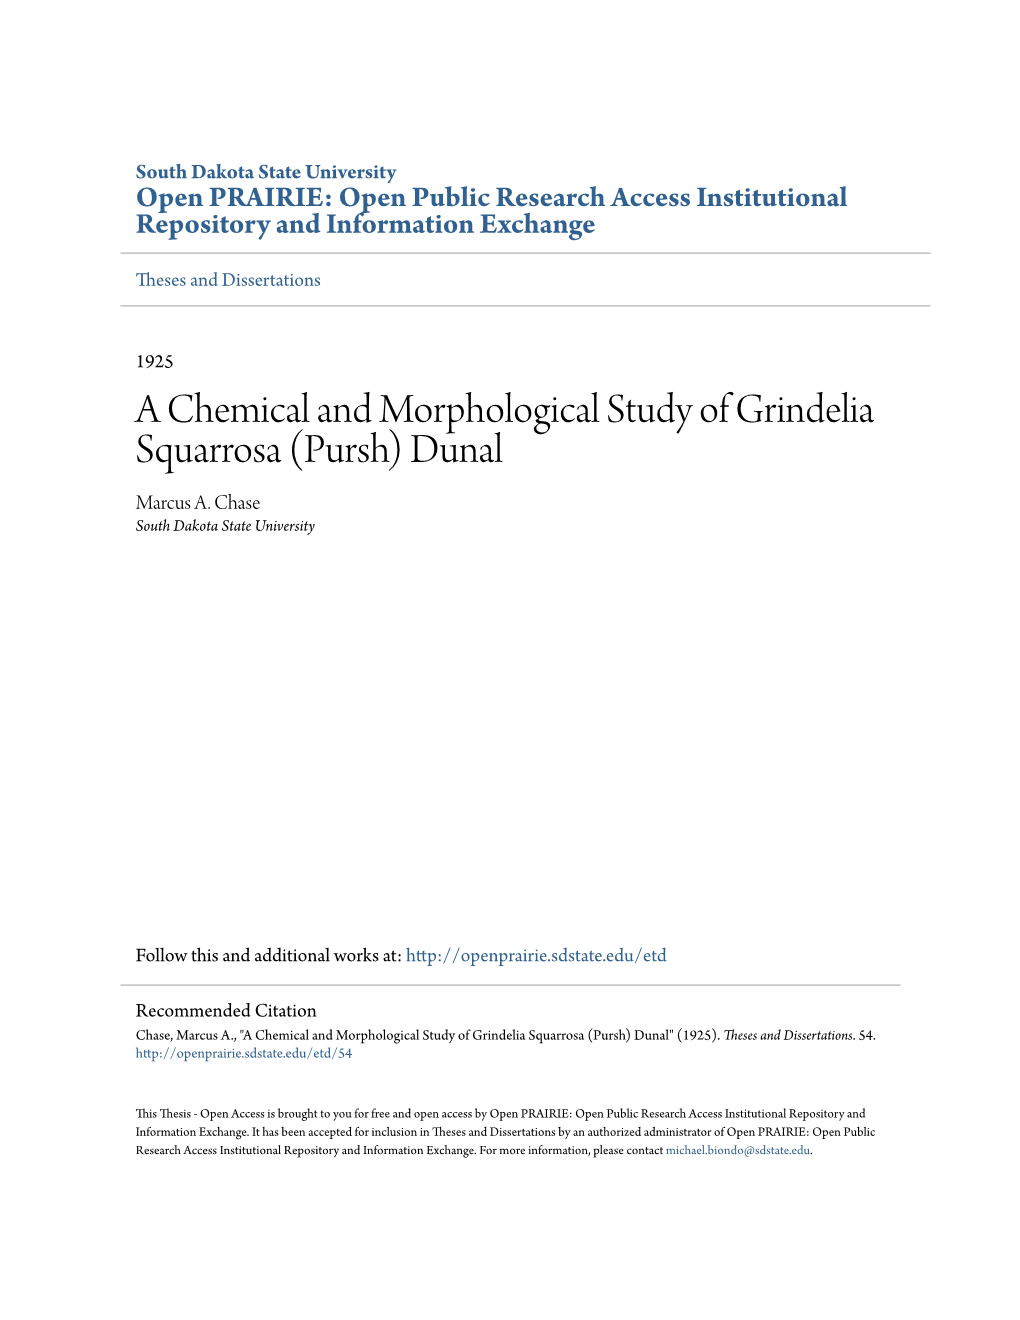 A Chemical and Morphological Study of Grindelia Squarrosa (Pursh) Dunal Marcus A